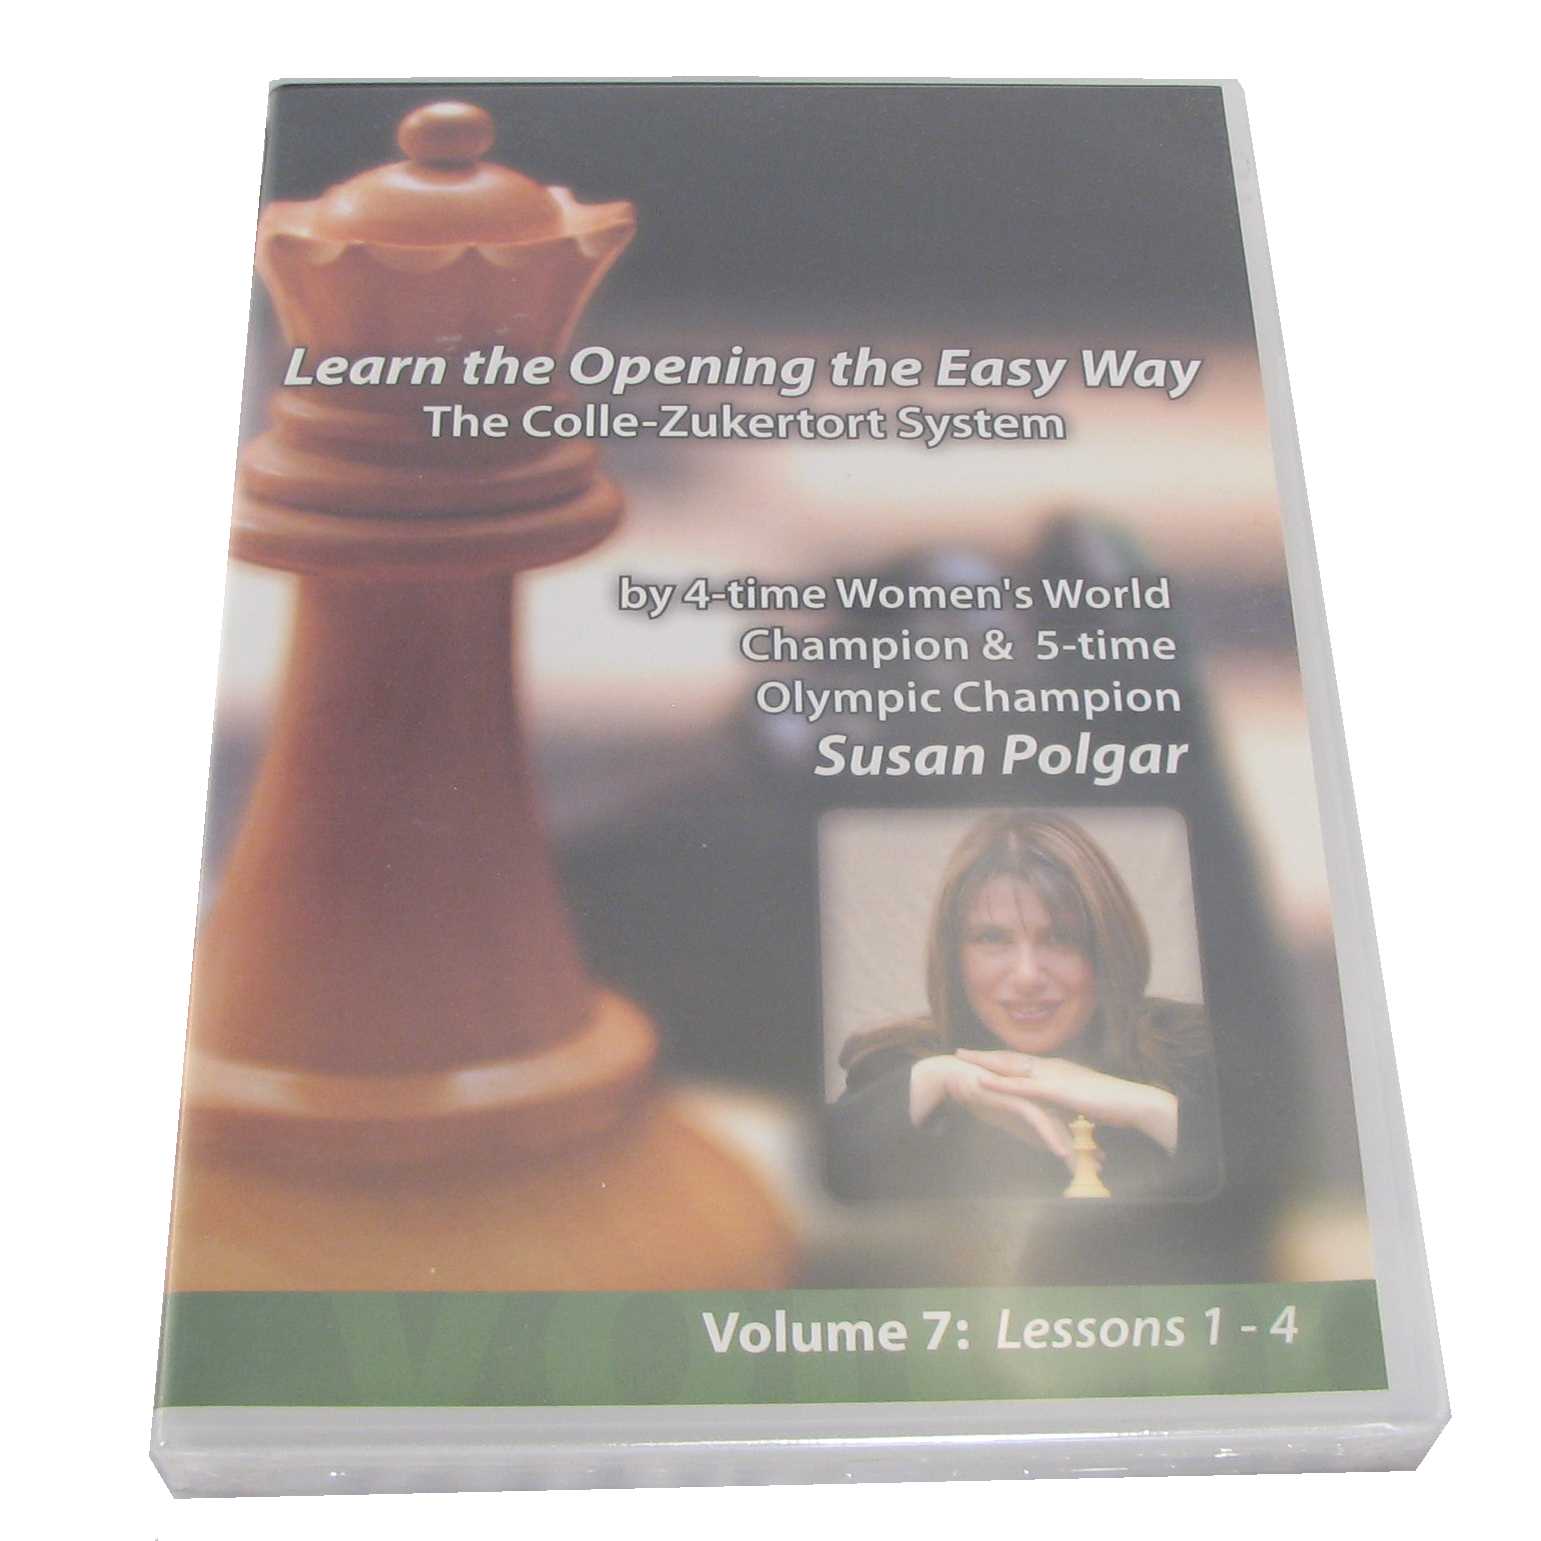 The chess games of Susan Polgar